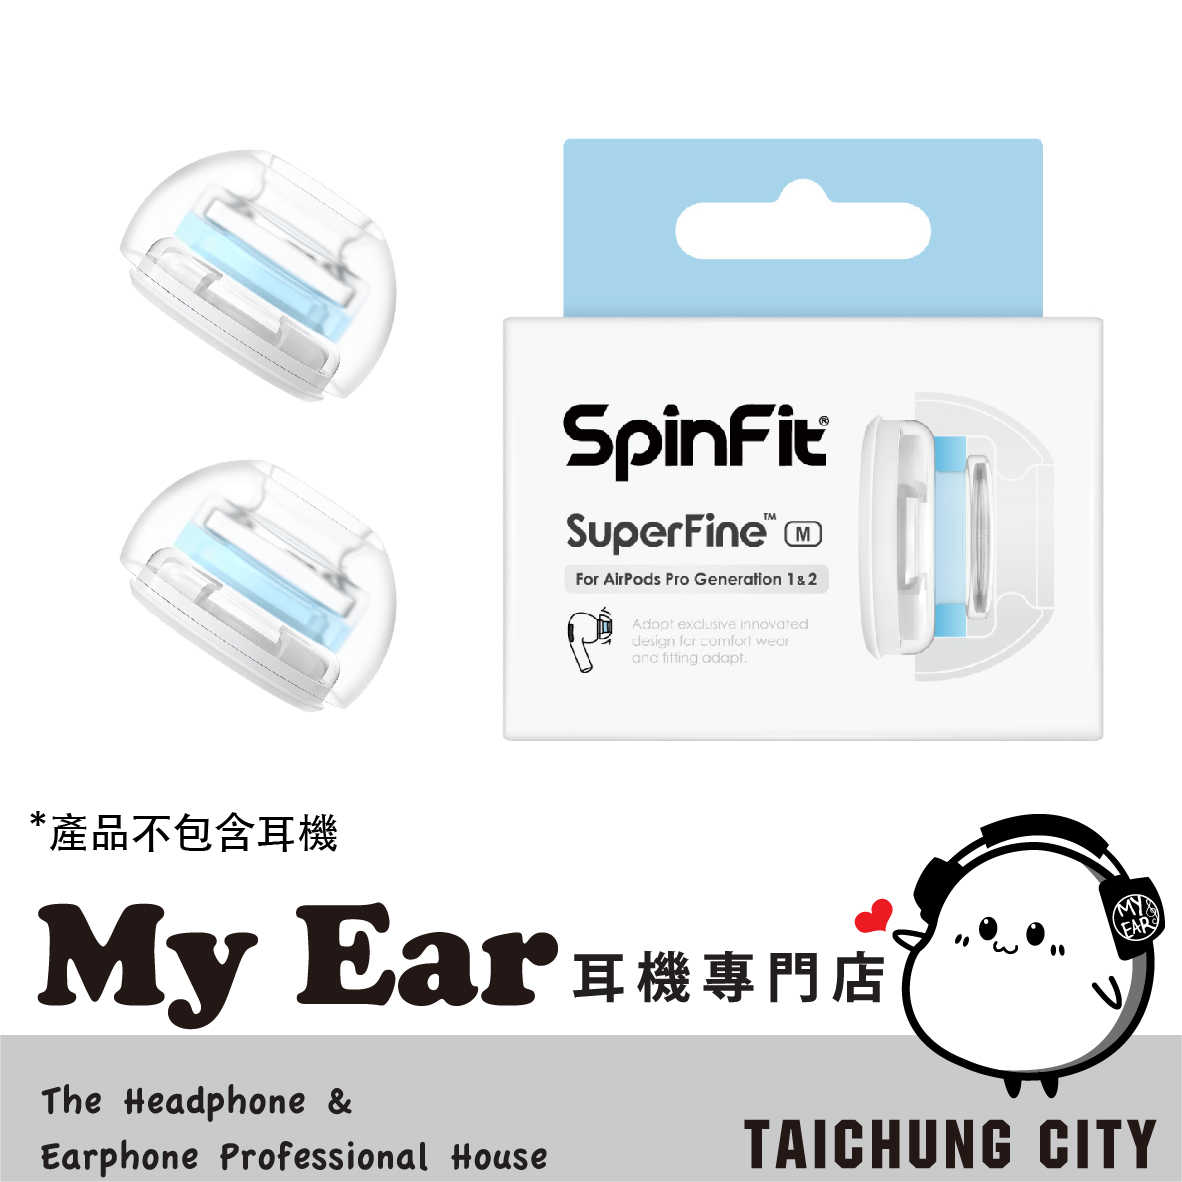 SpinFit SuperFine M 適用Airpods Pro CP1025 矽膠耳塞 | My Ear耳機專門店